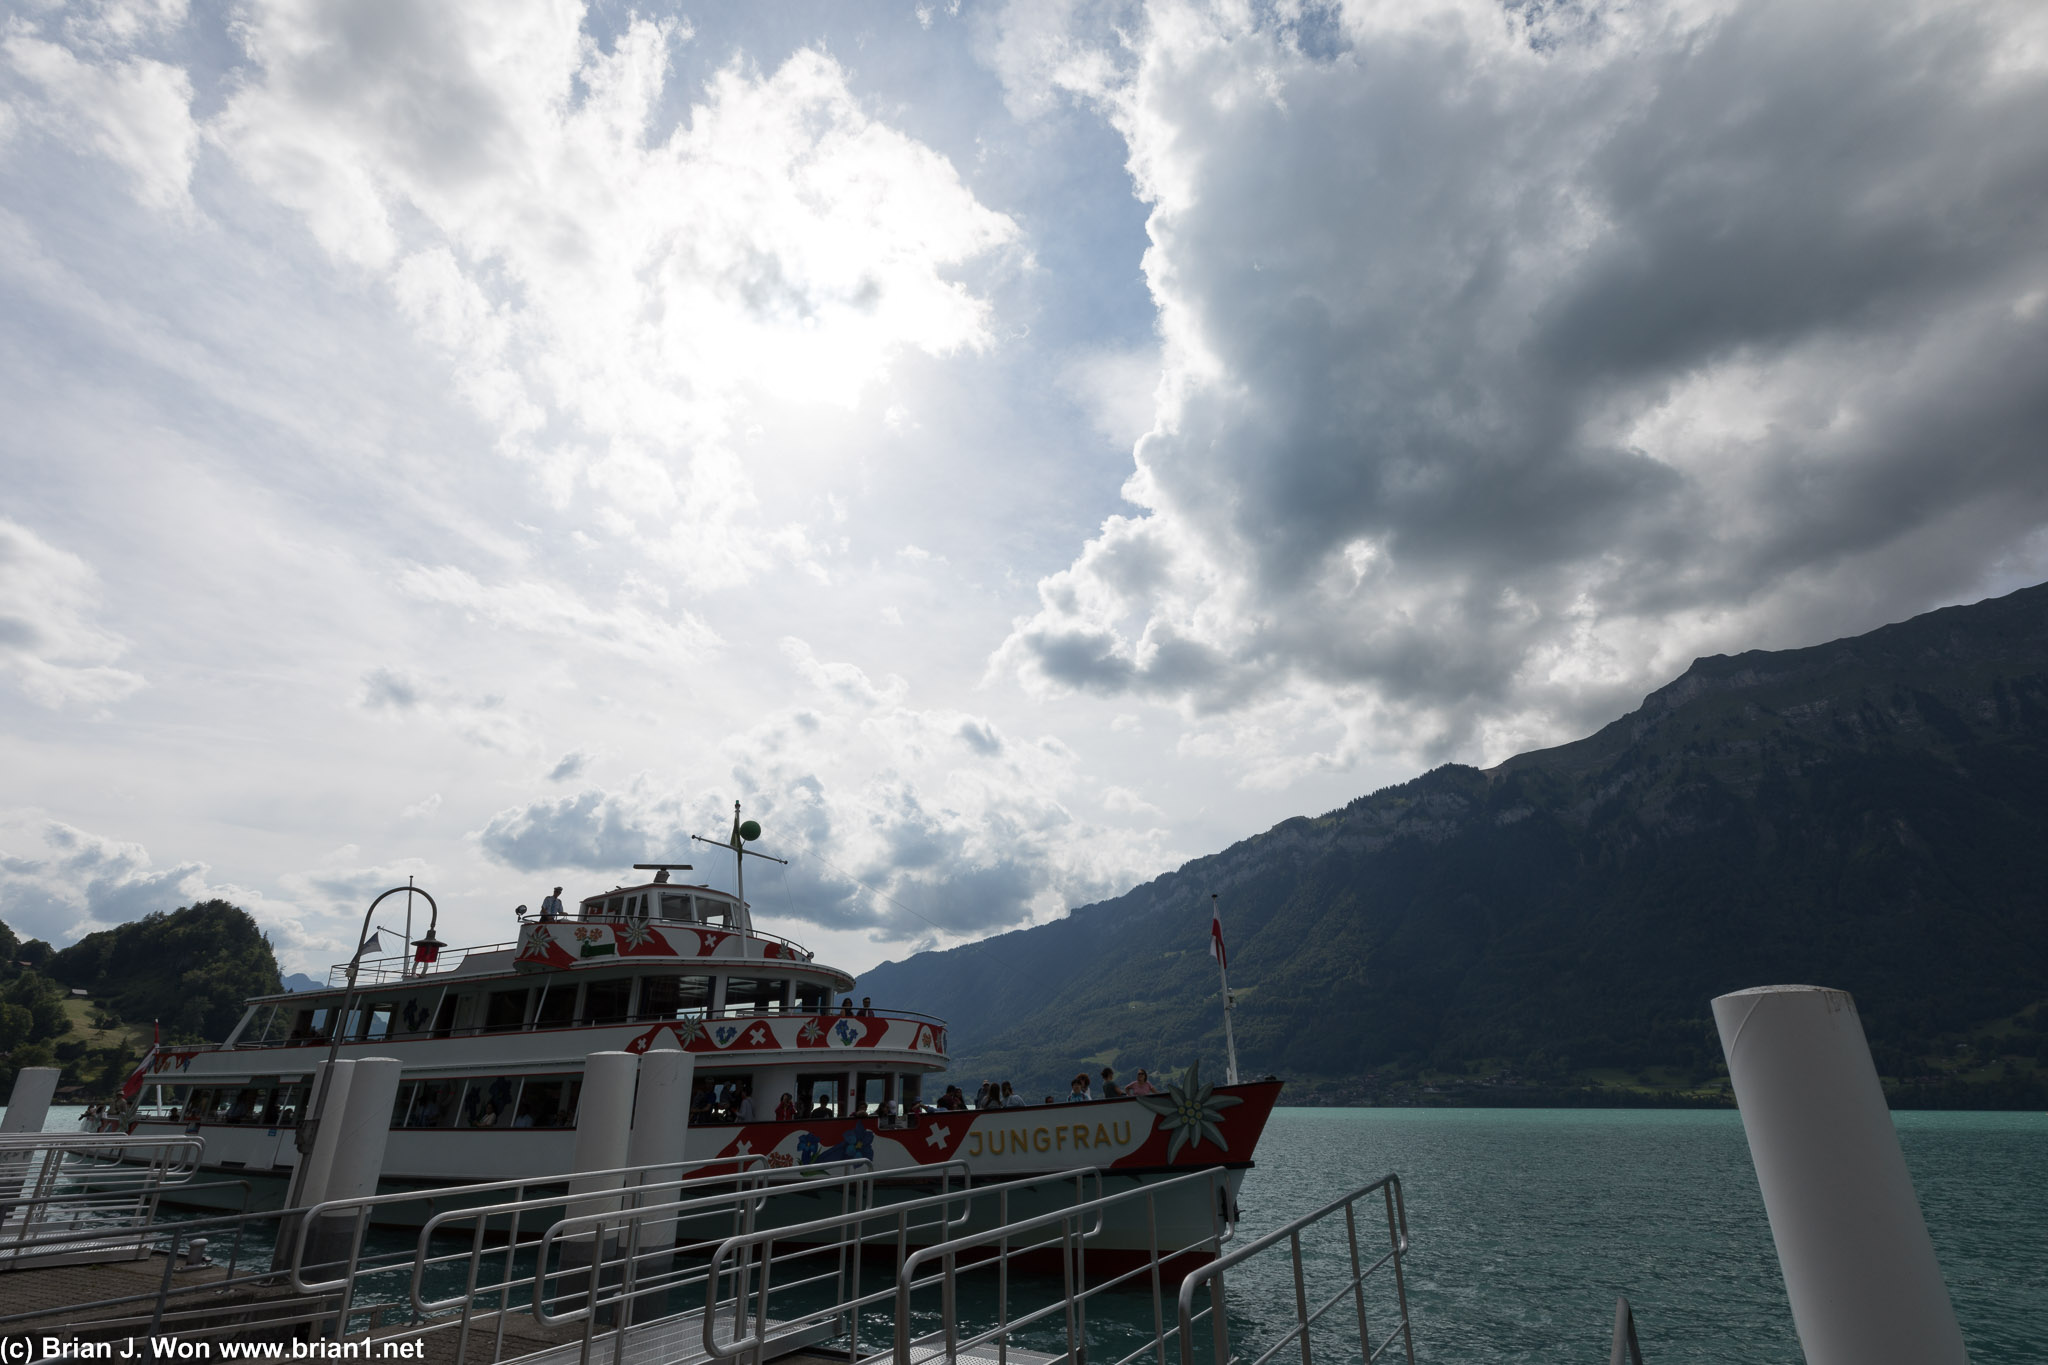 The ferry Jungfrau.